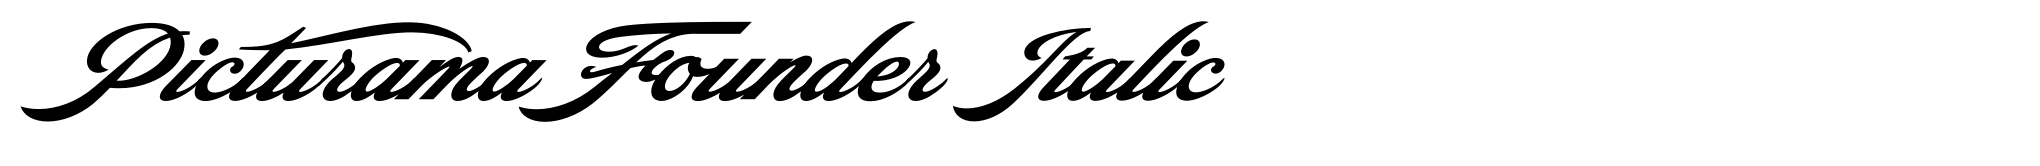 Picturama Founder Italic image